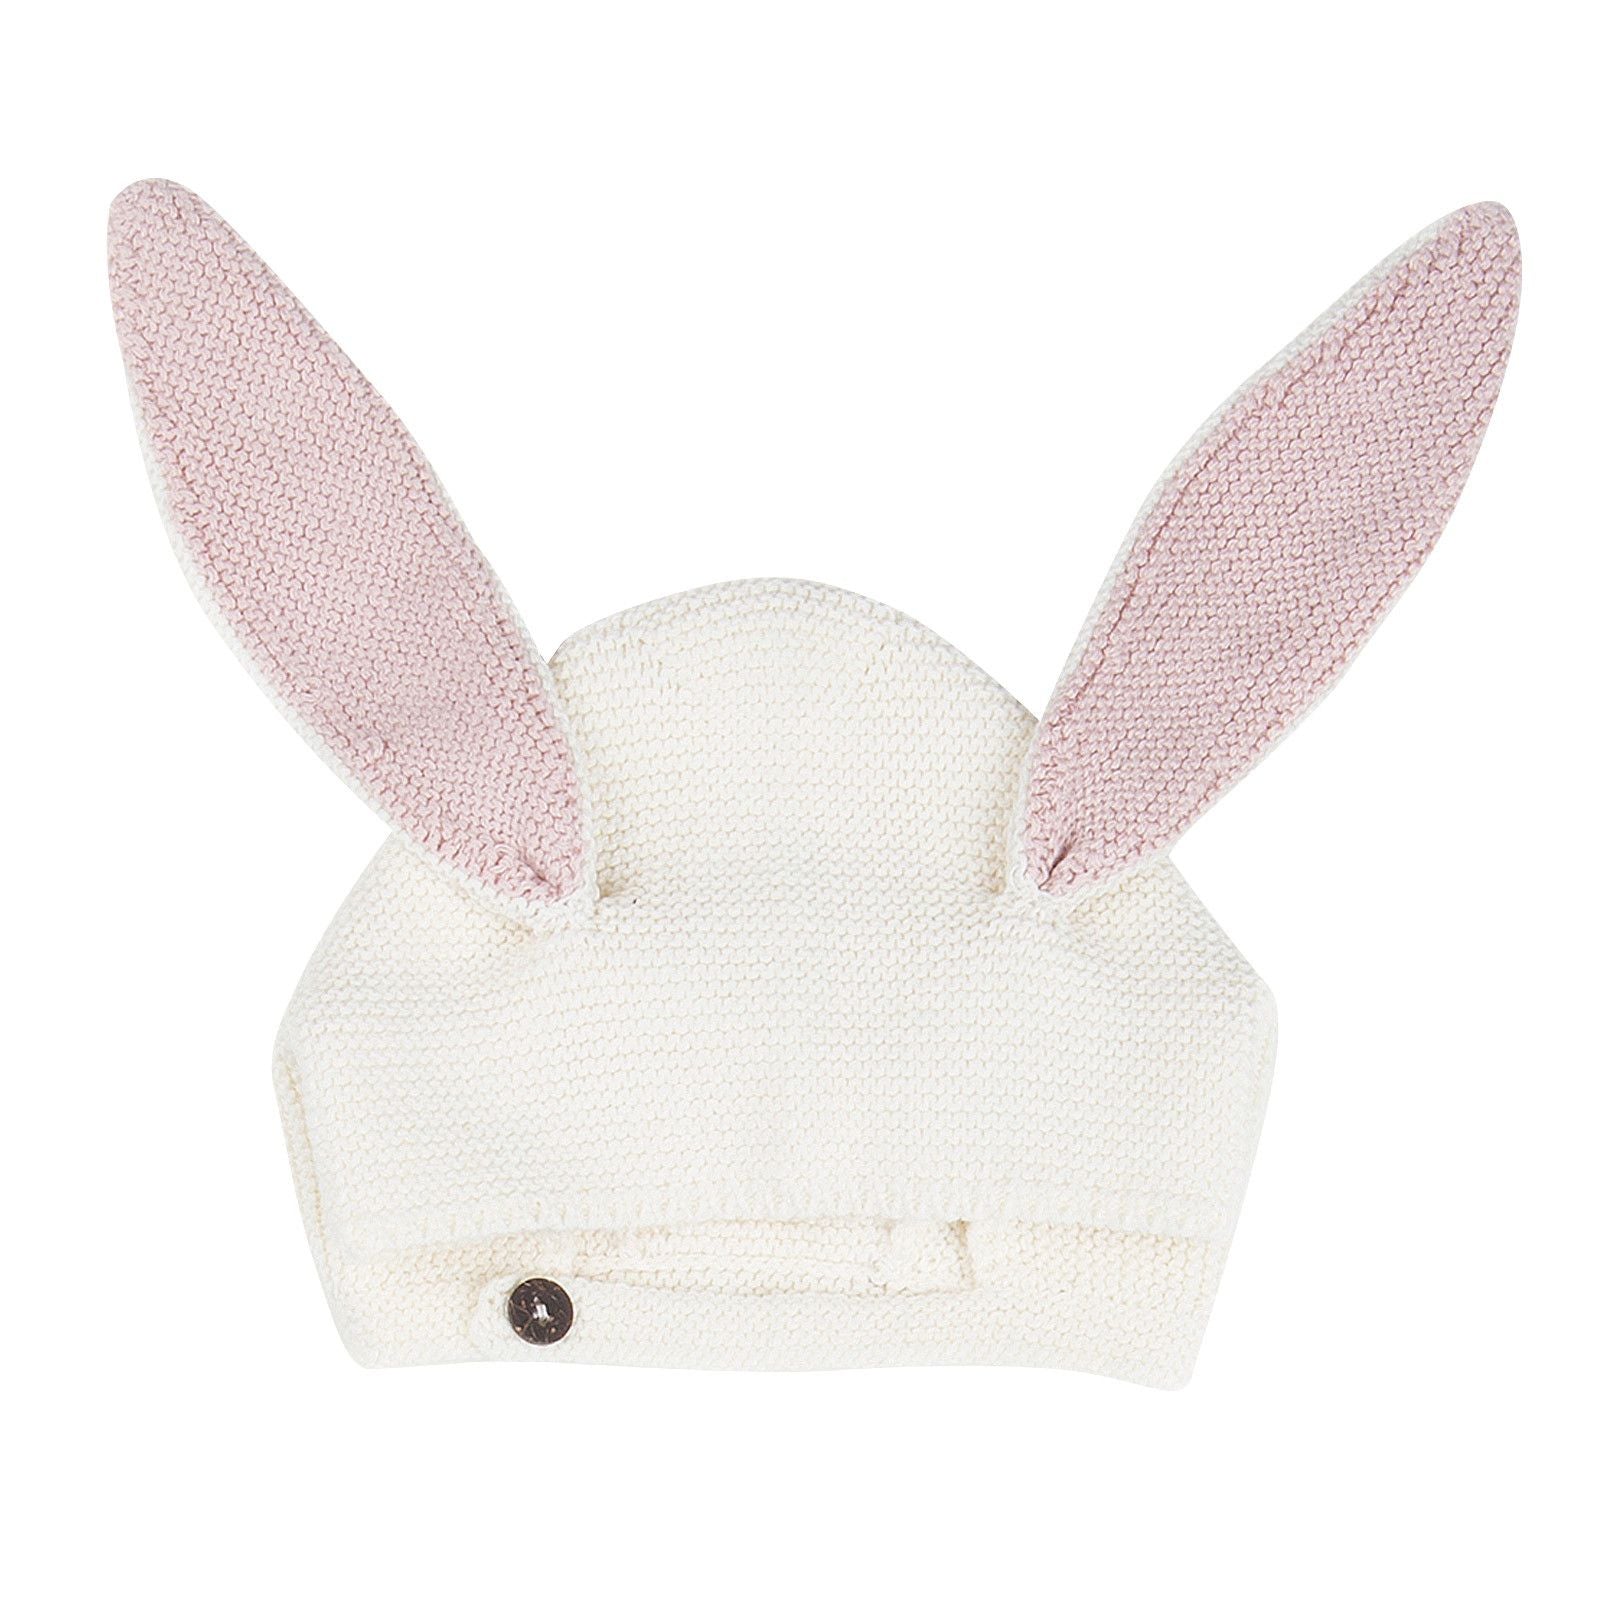 Baby White Alpaga Wool Bunny Ears Earflaps Hats - CÉMAROSE | Children's Fashion Store - 2